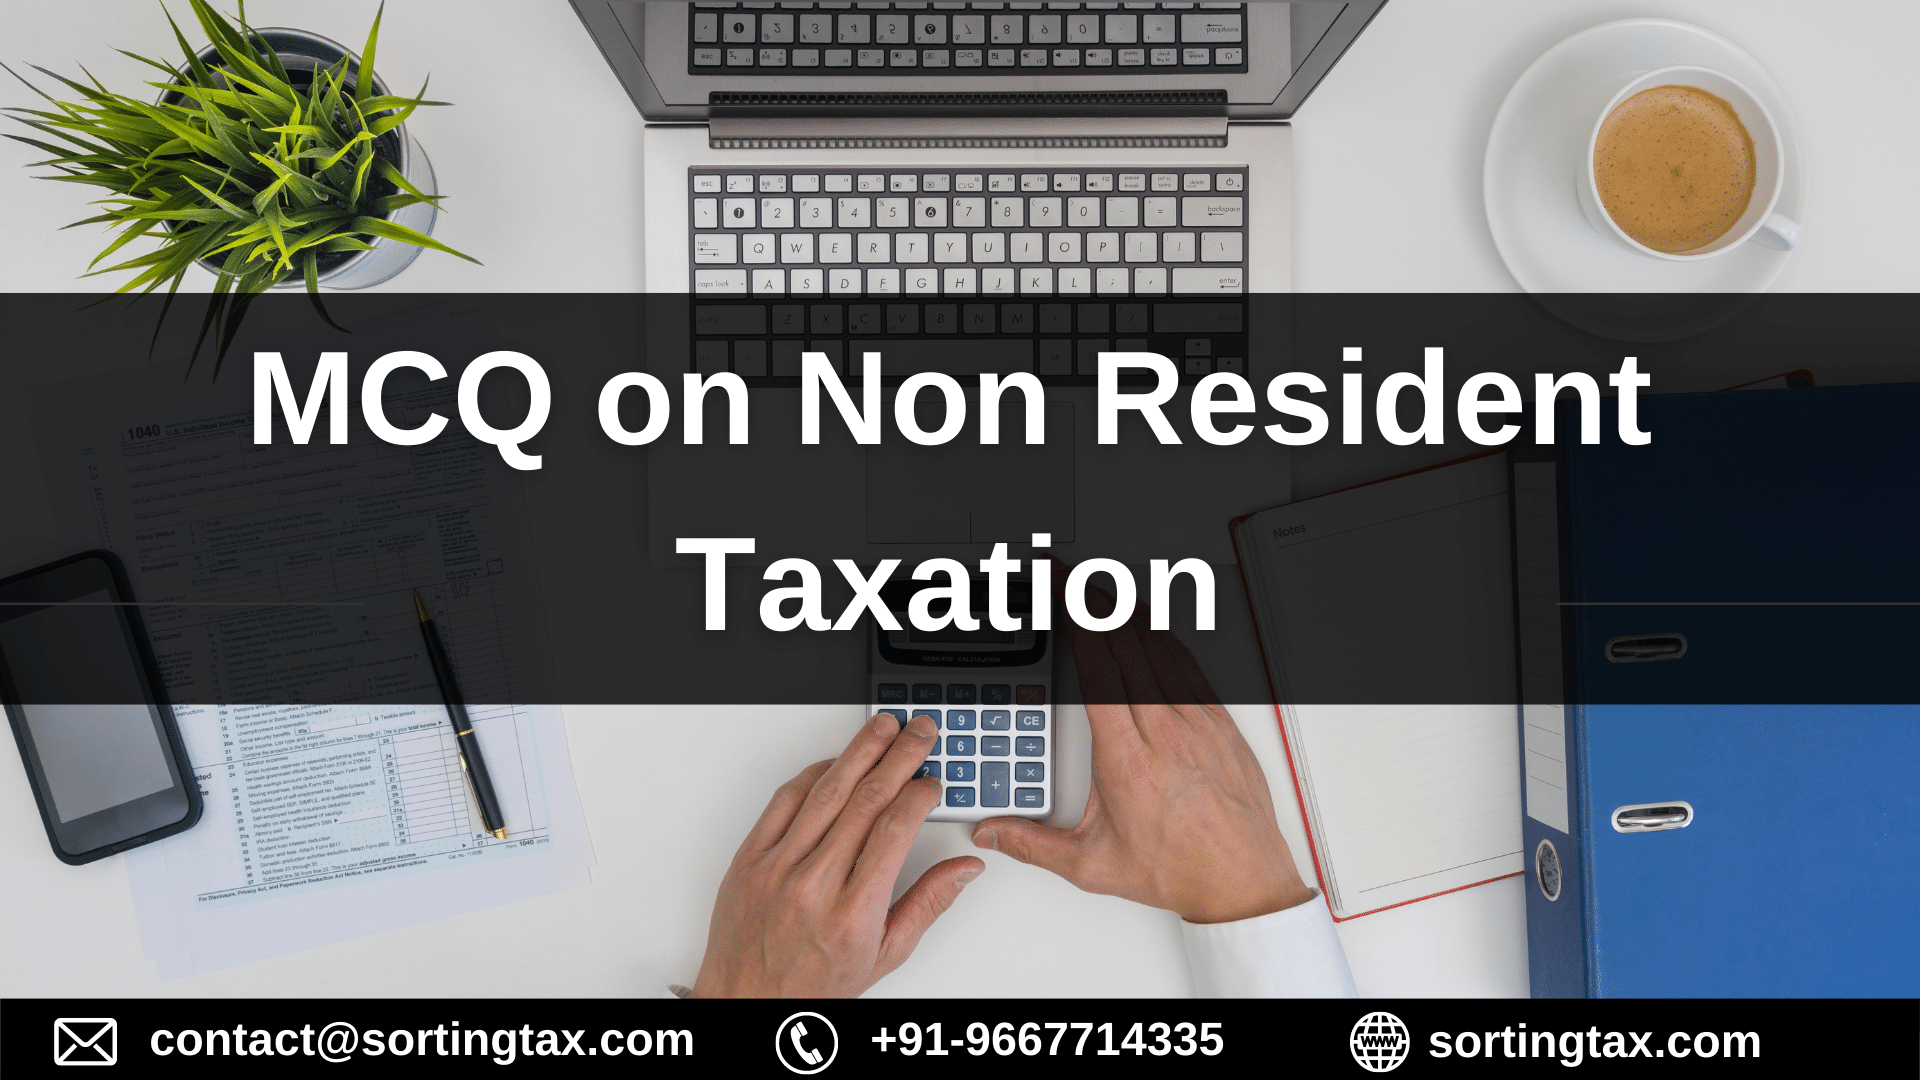 MCQ on Non Resident Taxation - International Taxation